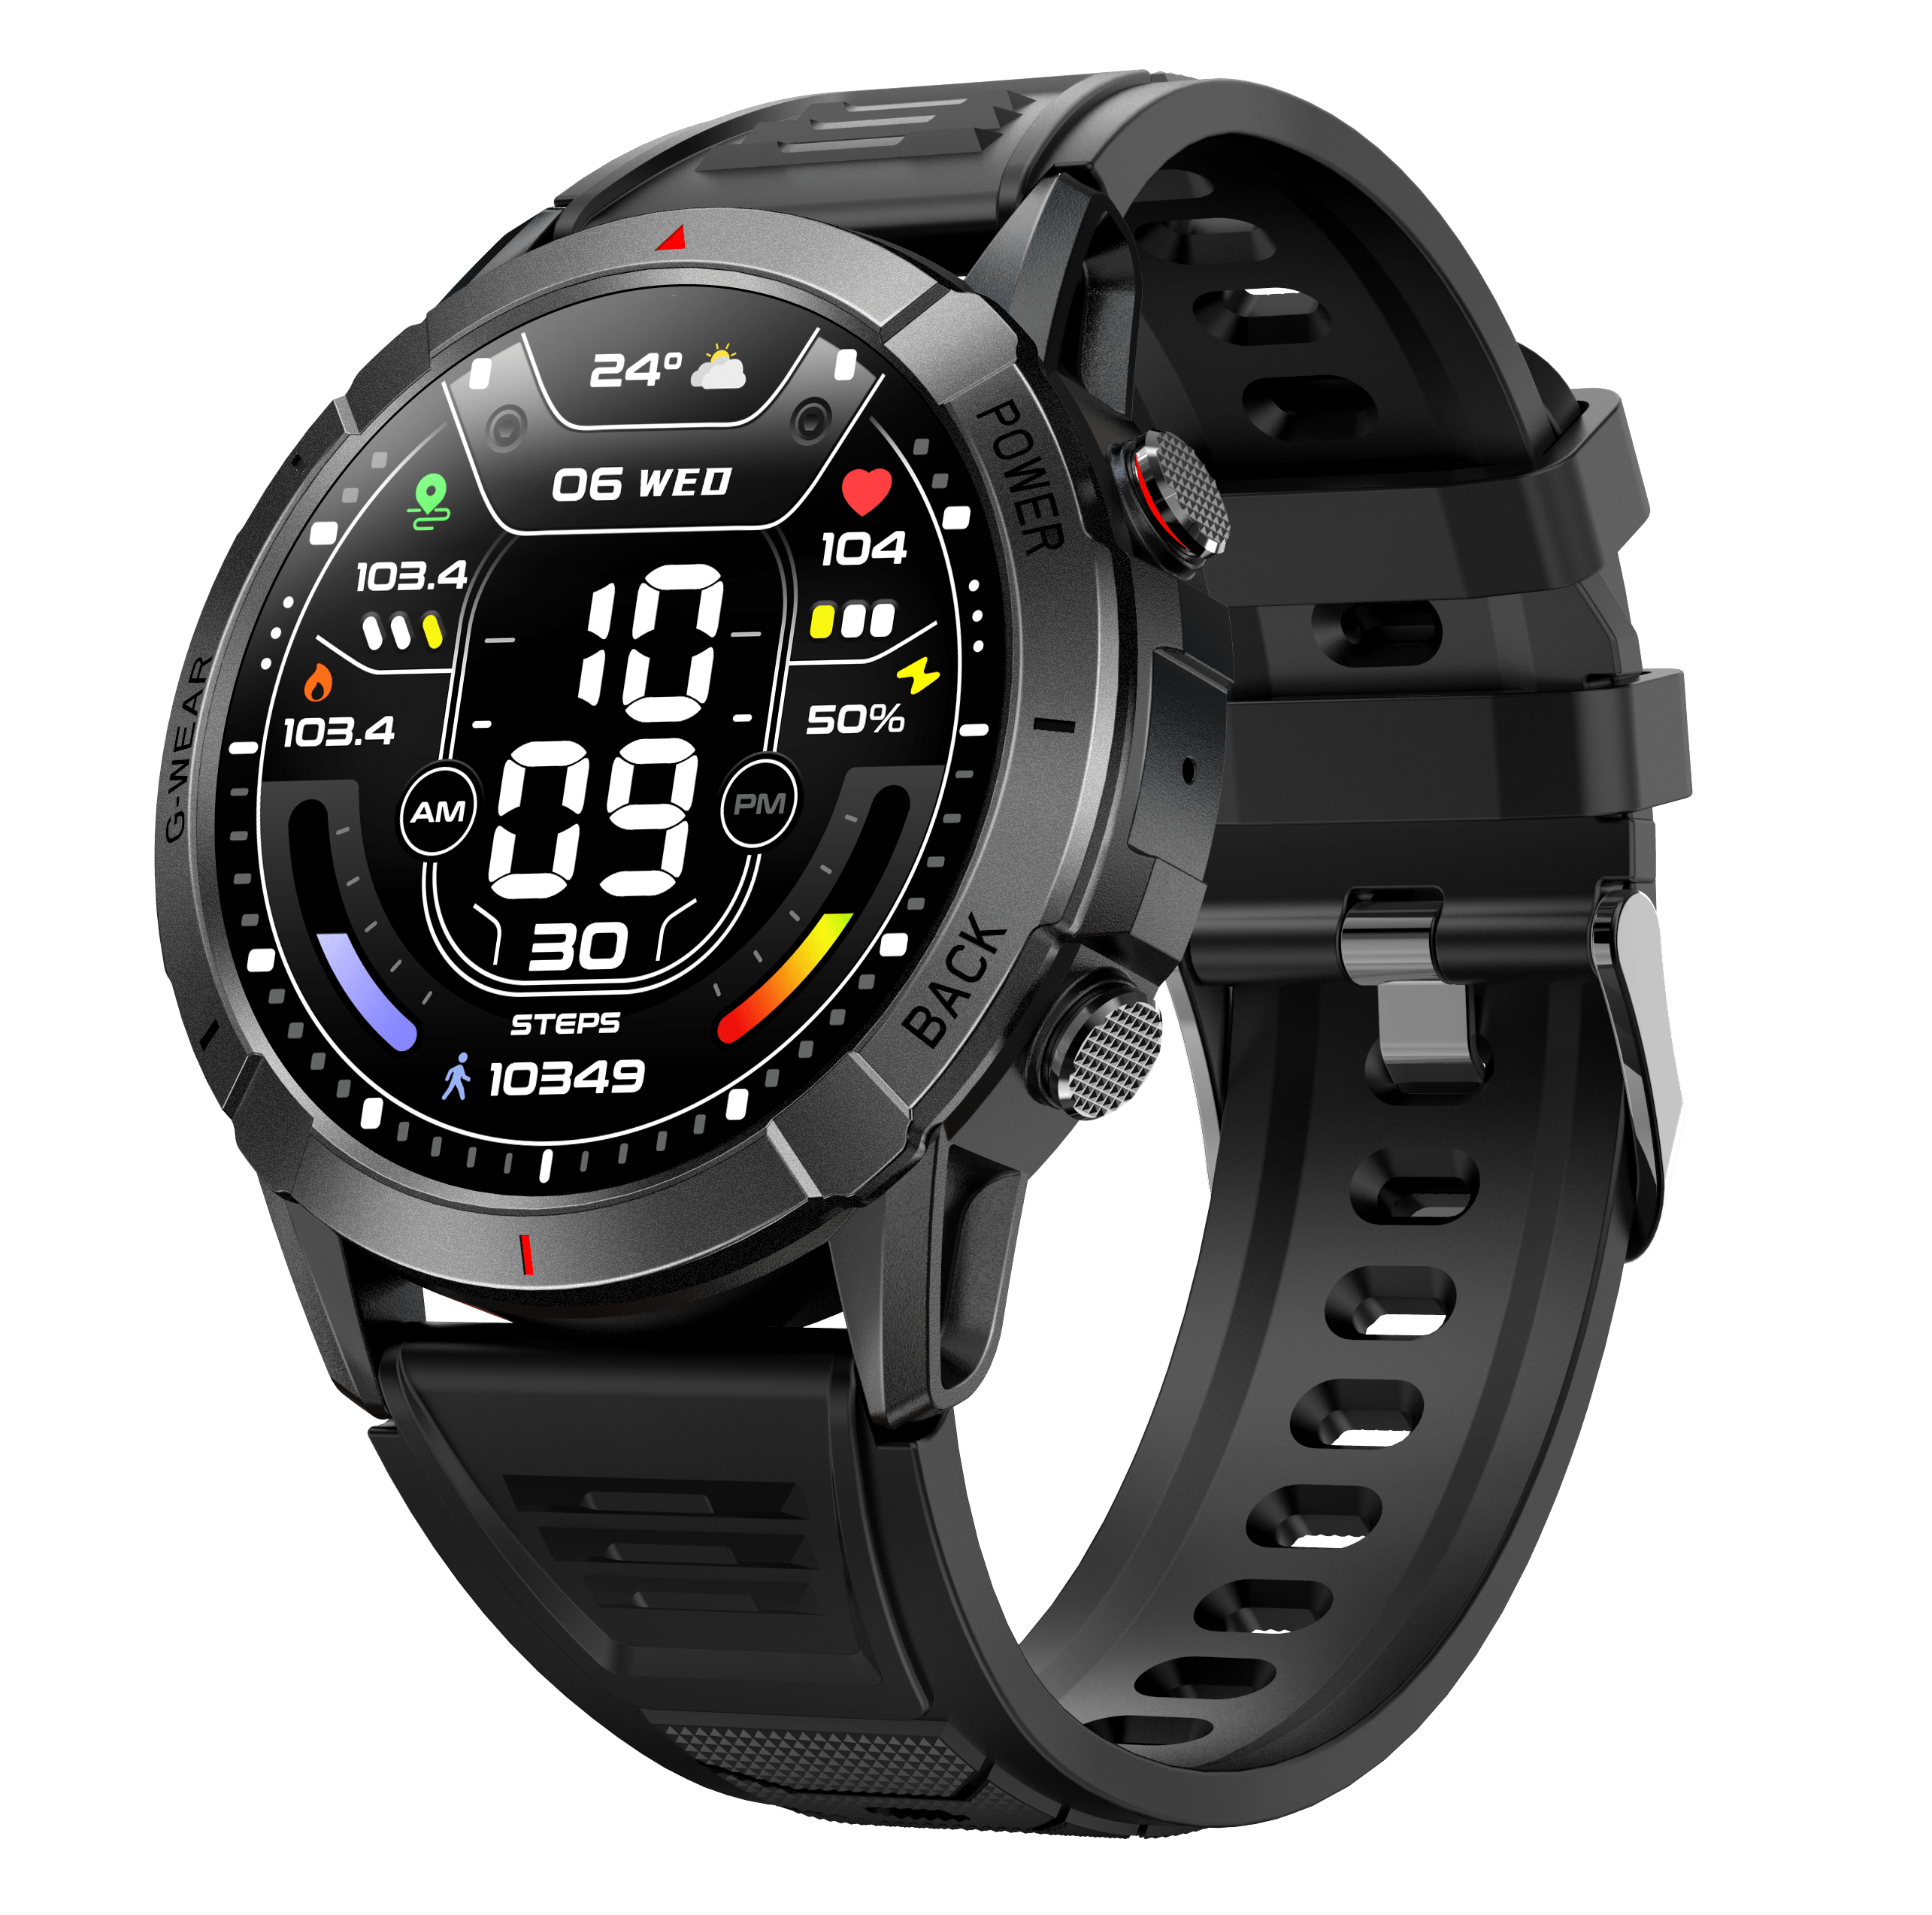 Ceas Smartwatch, BLEKSY®, Robust, 36mm AMOLED, Full Touch Screen, Apeluri, Notificari, Baterie durabila, Negru